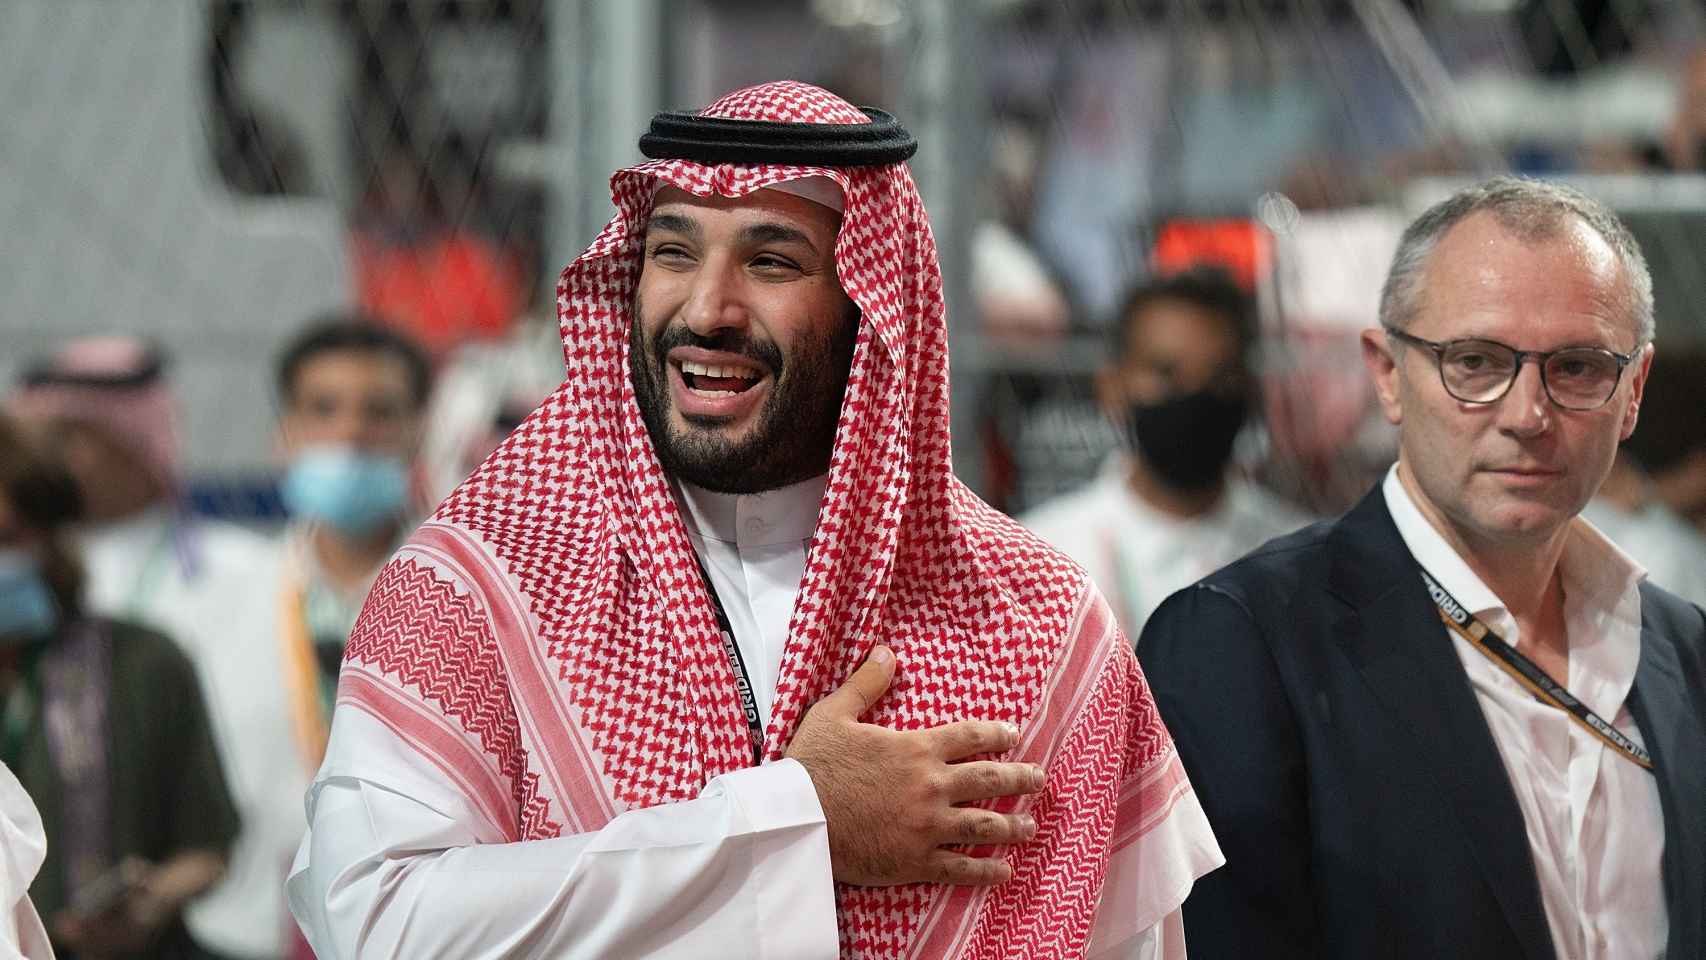 Mohammed bin Salman Al Saud, príncipe del reino de Arabia Saudí, junto a Stefano Domenicali, jefe de la Fórmula 1, en el circuito de Jeddah.